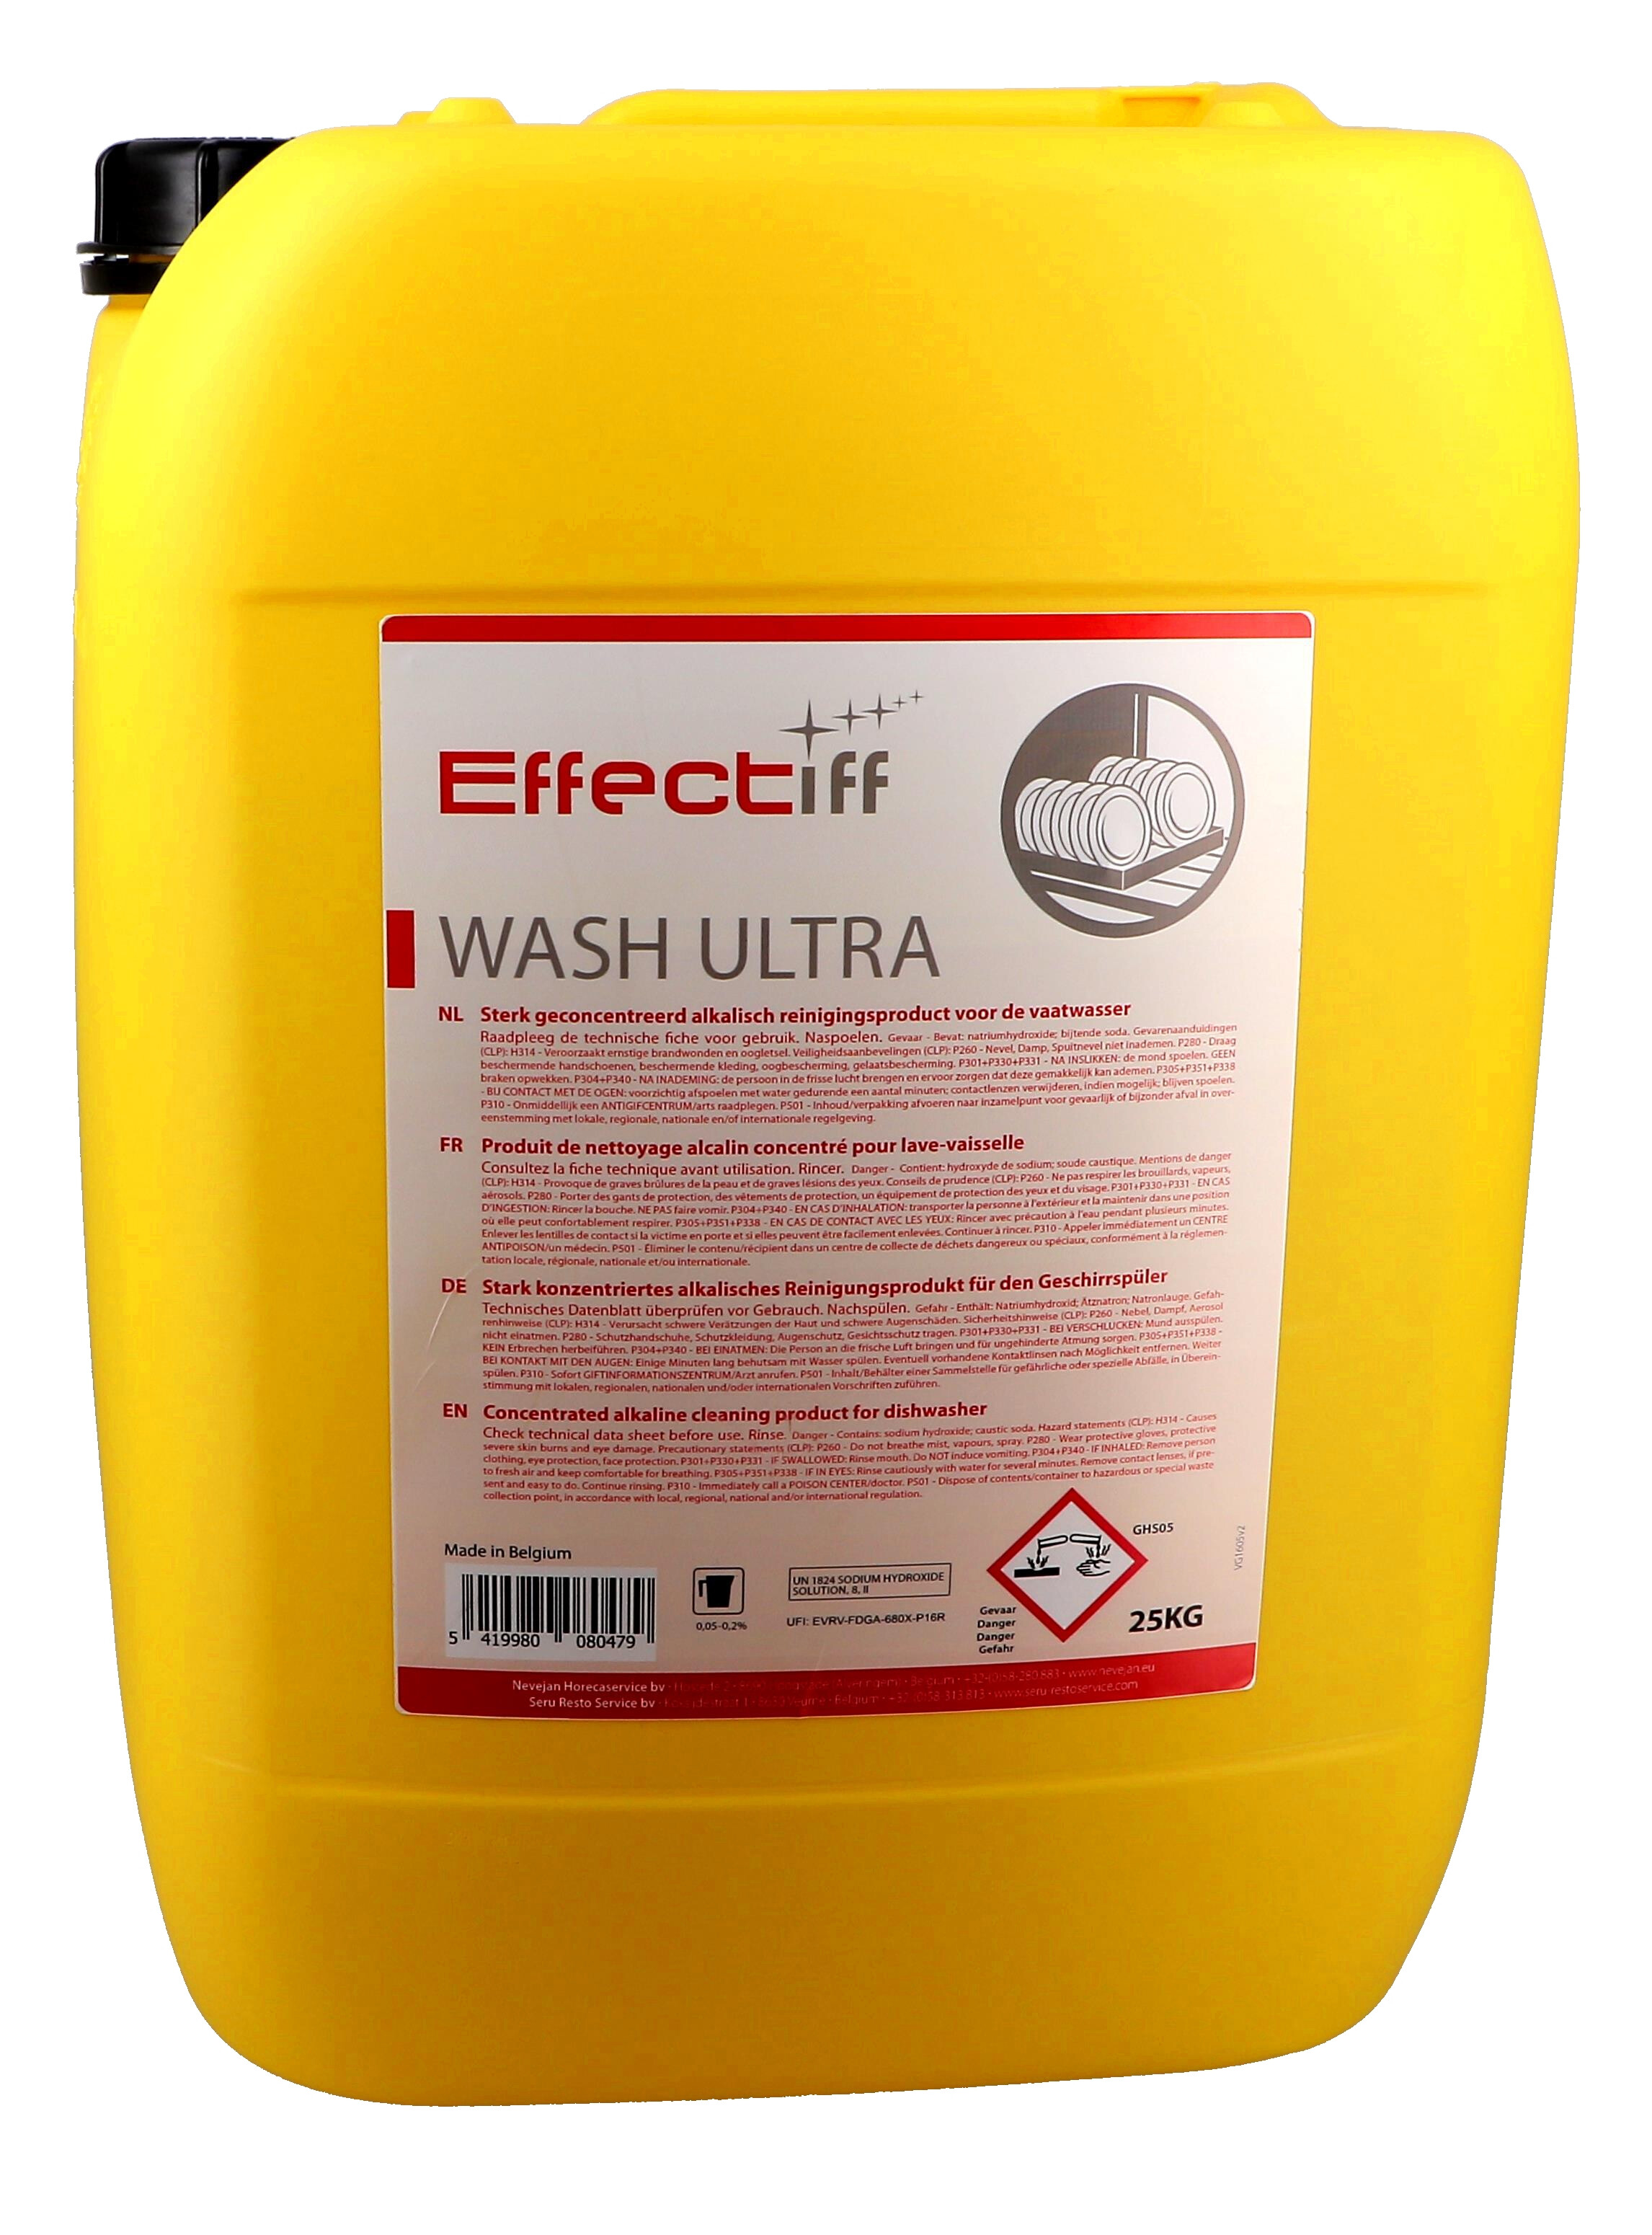 Effectiff Wash Ultra 25kg vloeibaar vaatwasmiddel